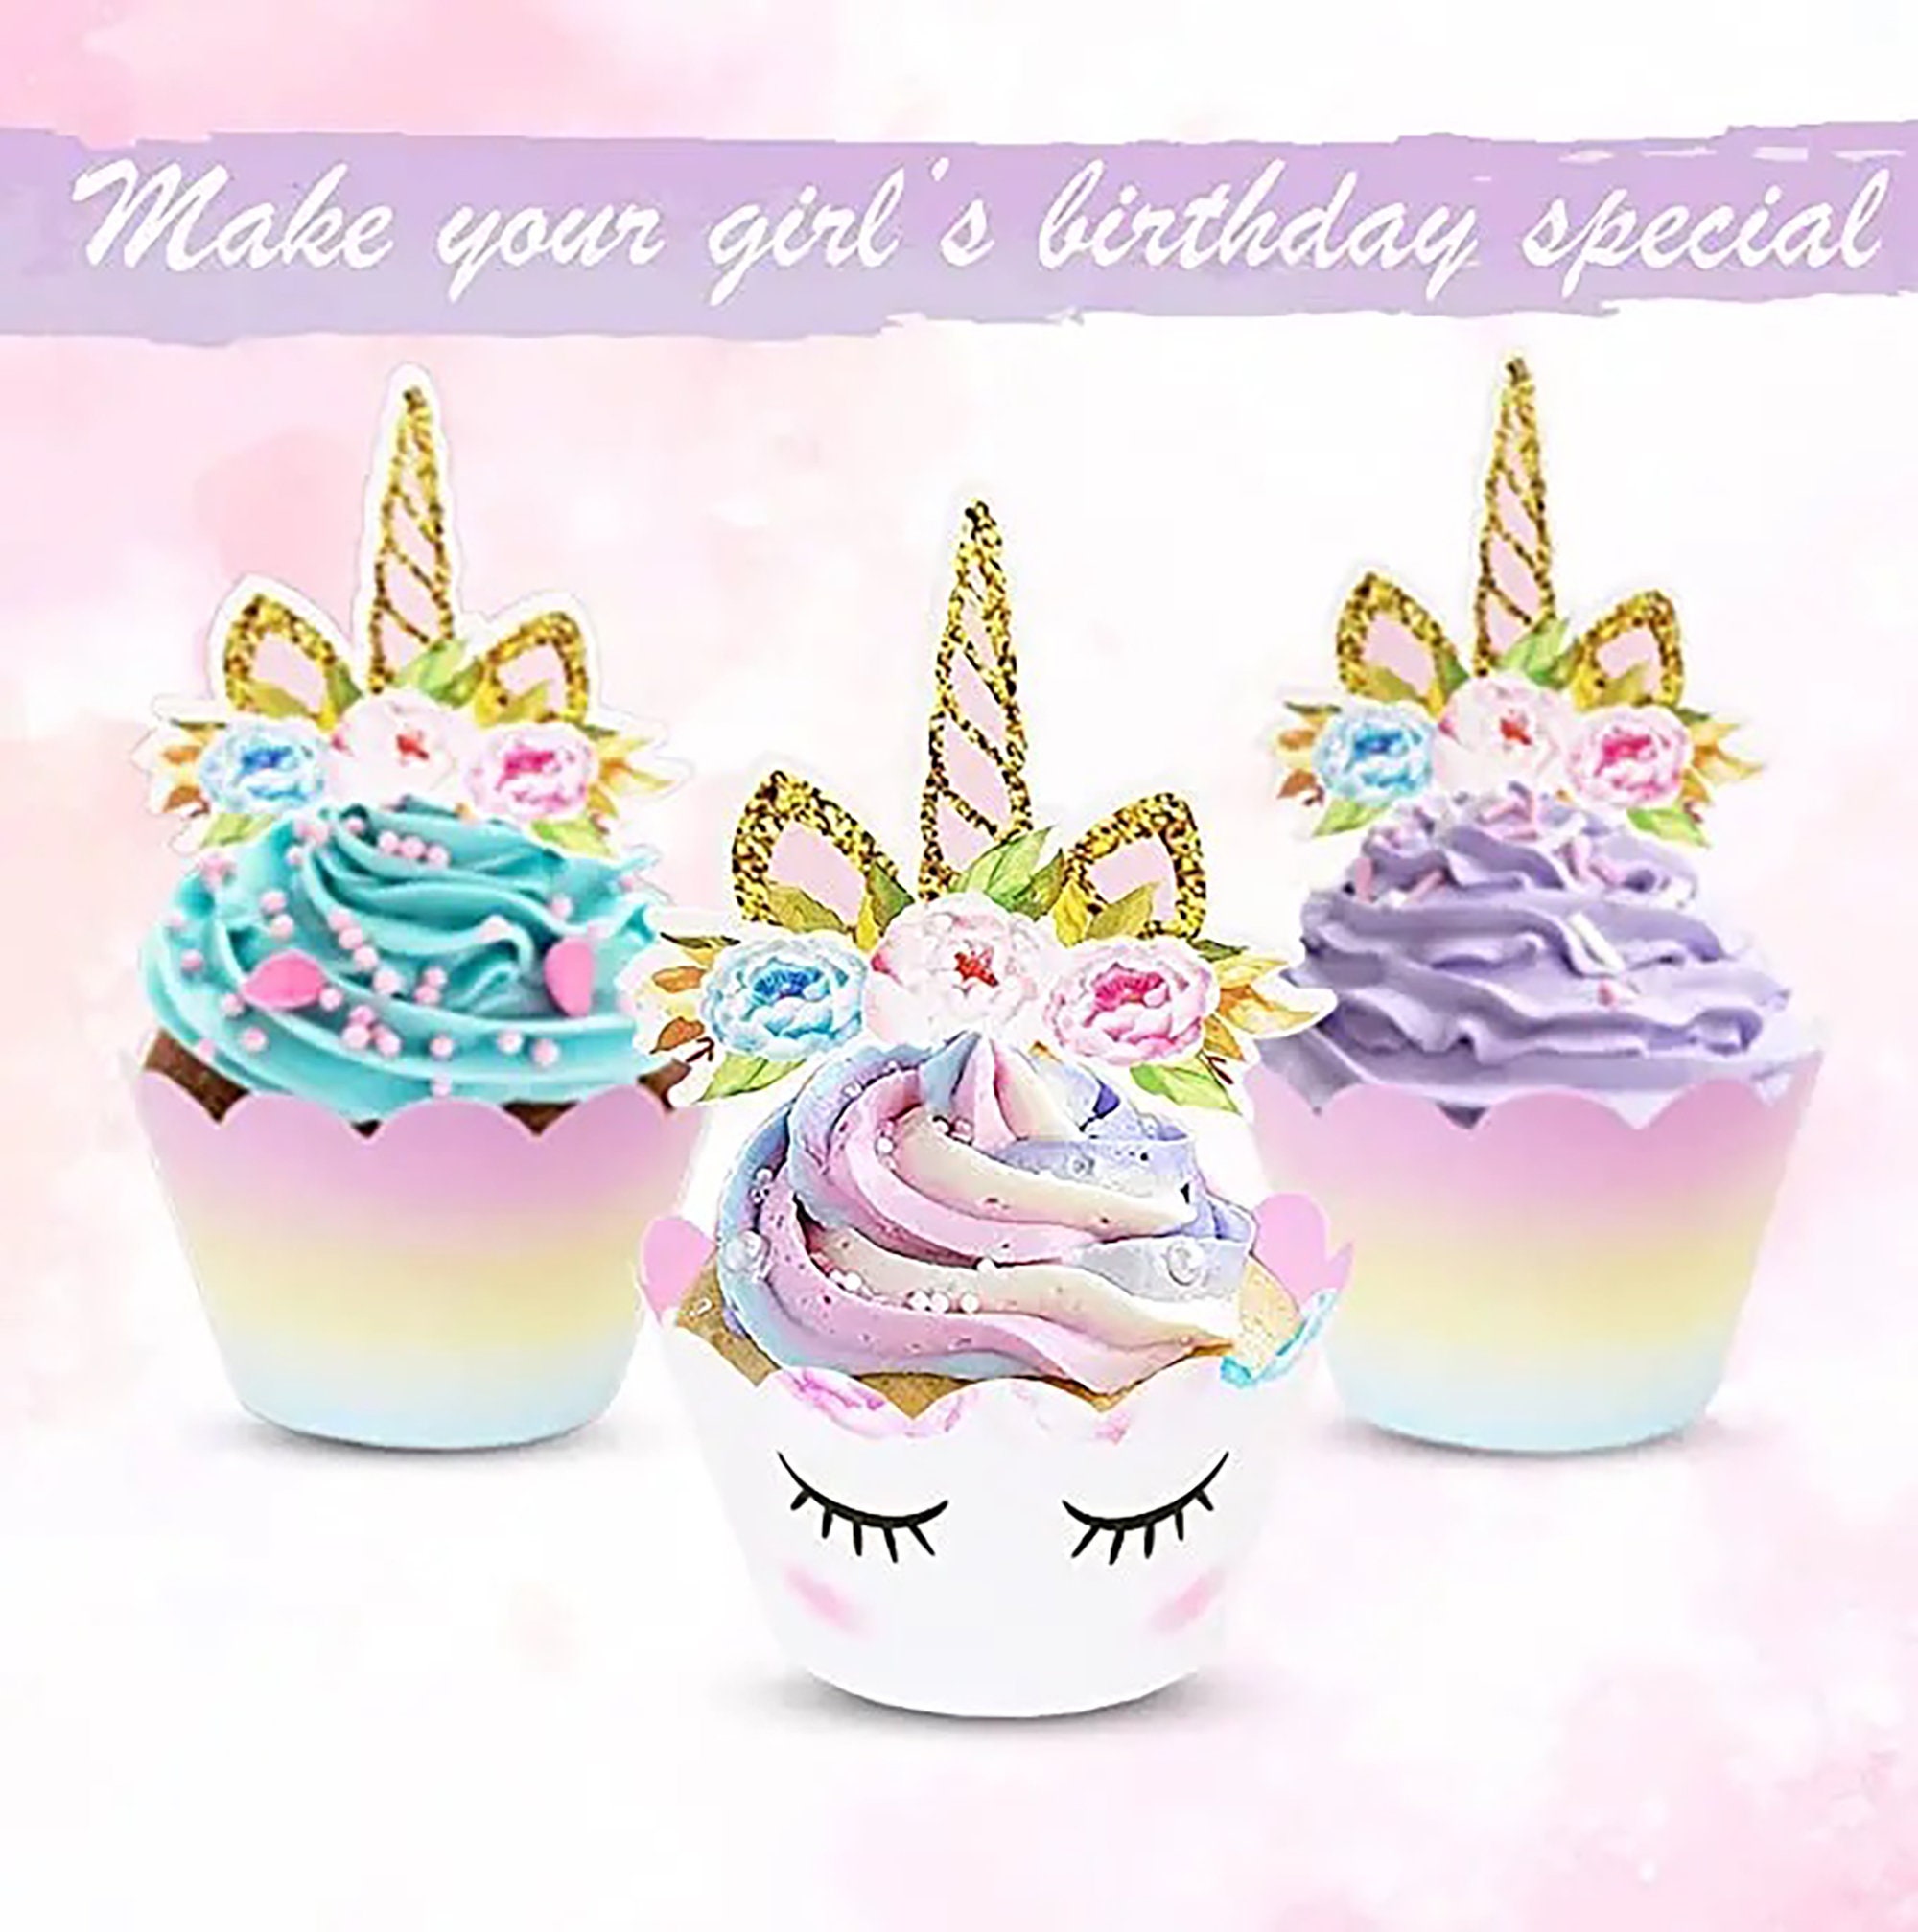 Cupcake Suncatcher Craft Kits for Girls, Baking Gifts for Kids